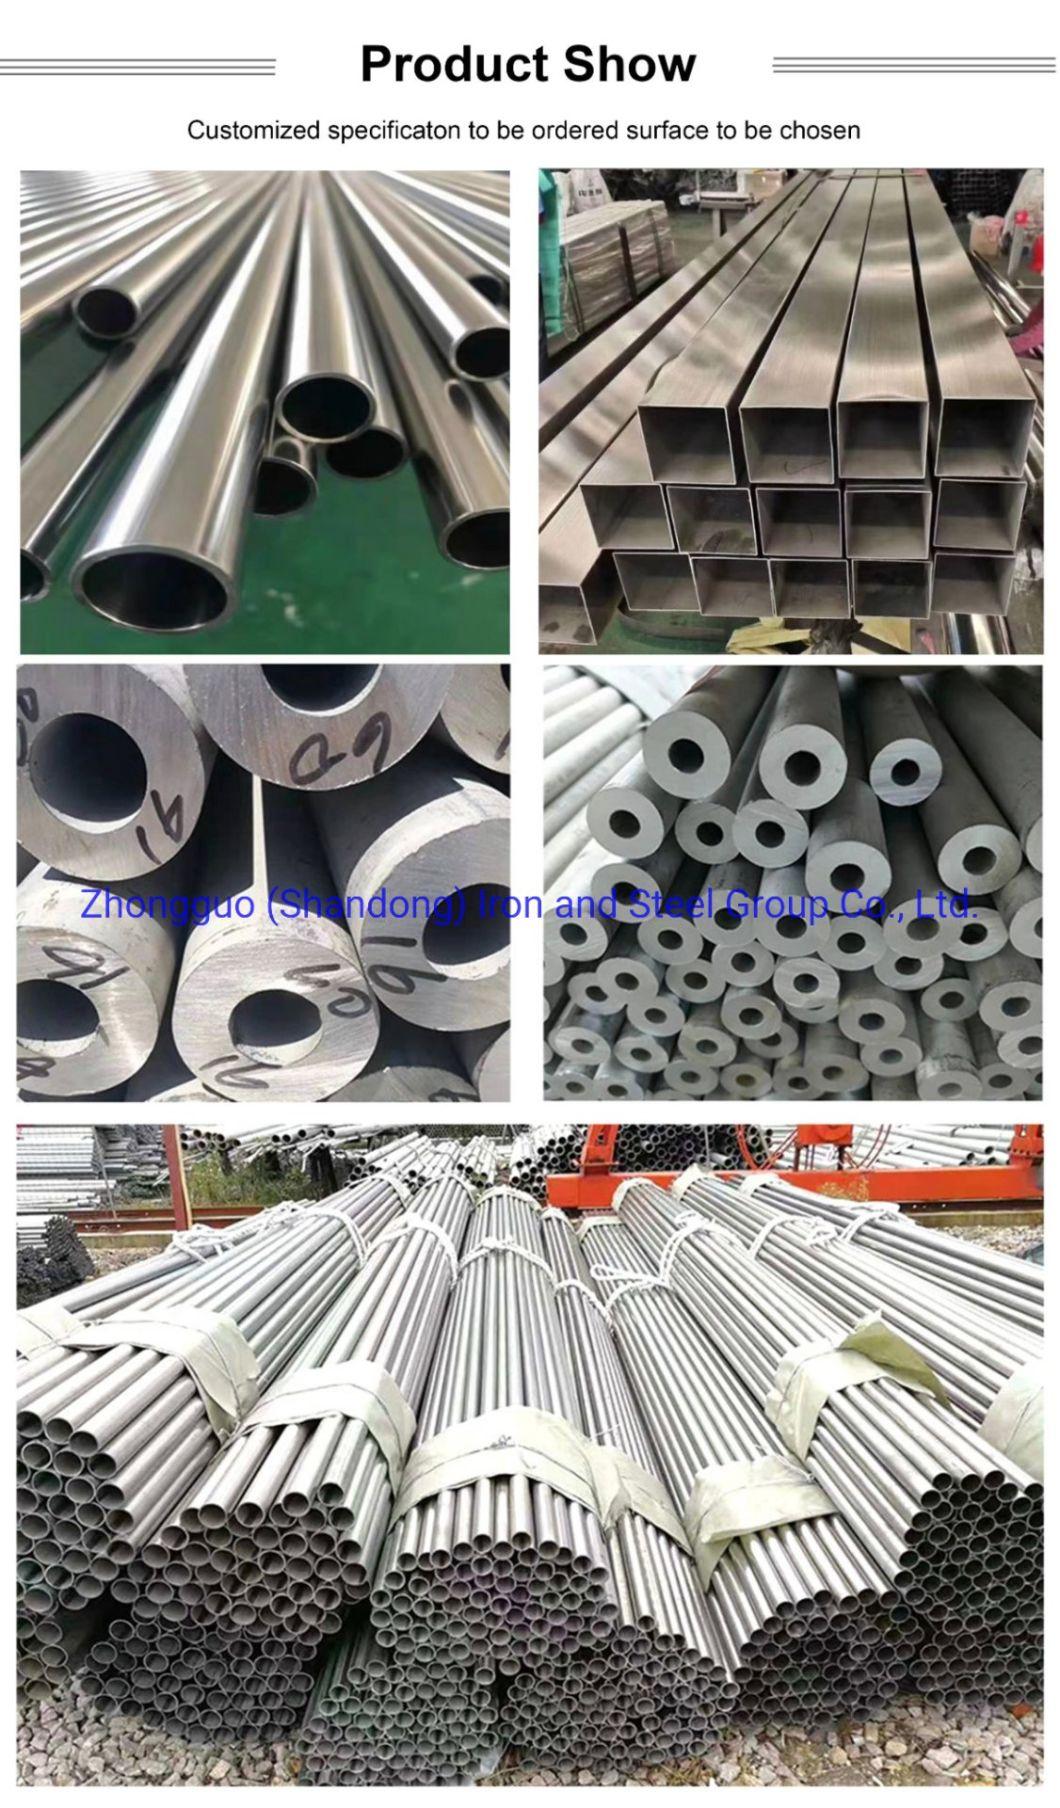 Xm7/Xm15/Xm27 2b/Sb Guozhong Hot Rolled Stainless Steel Tube/Pipe